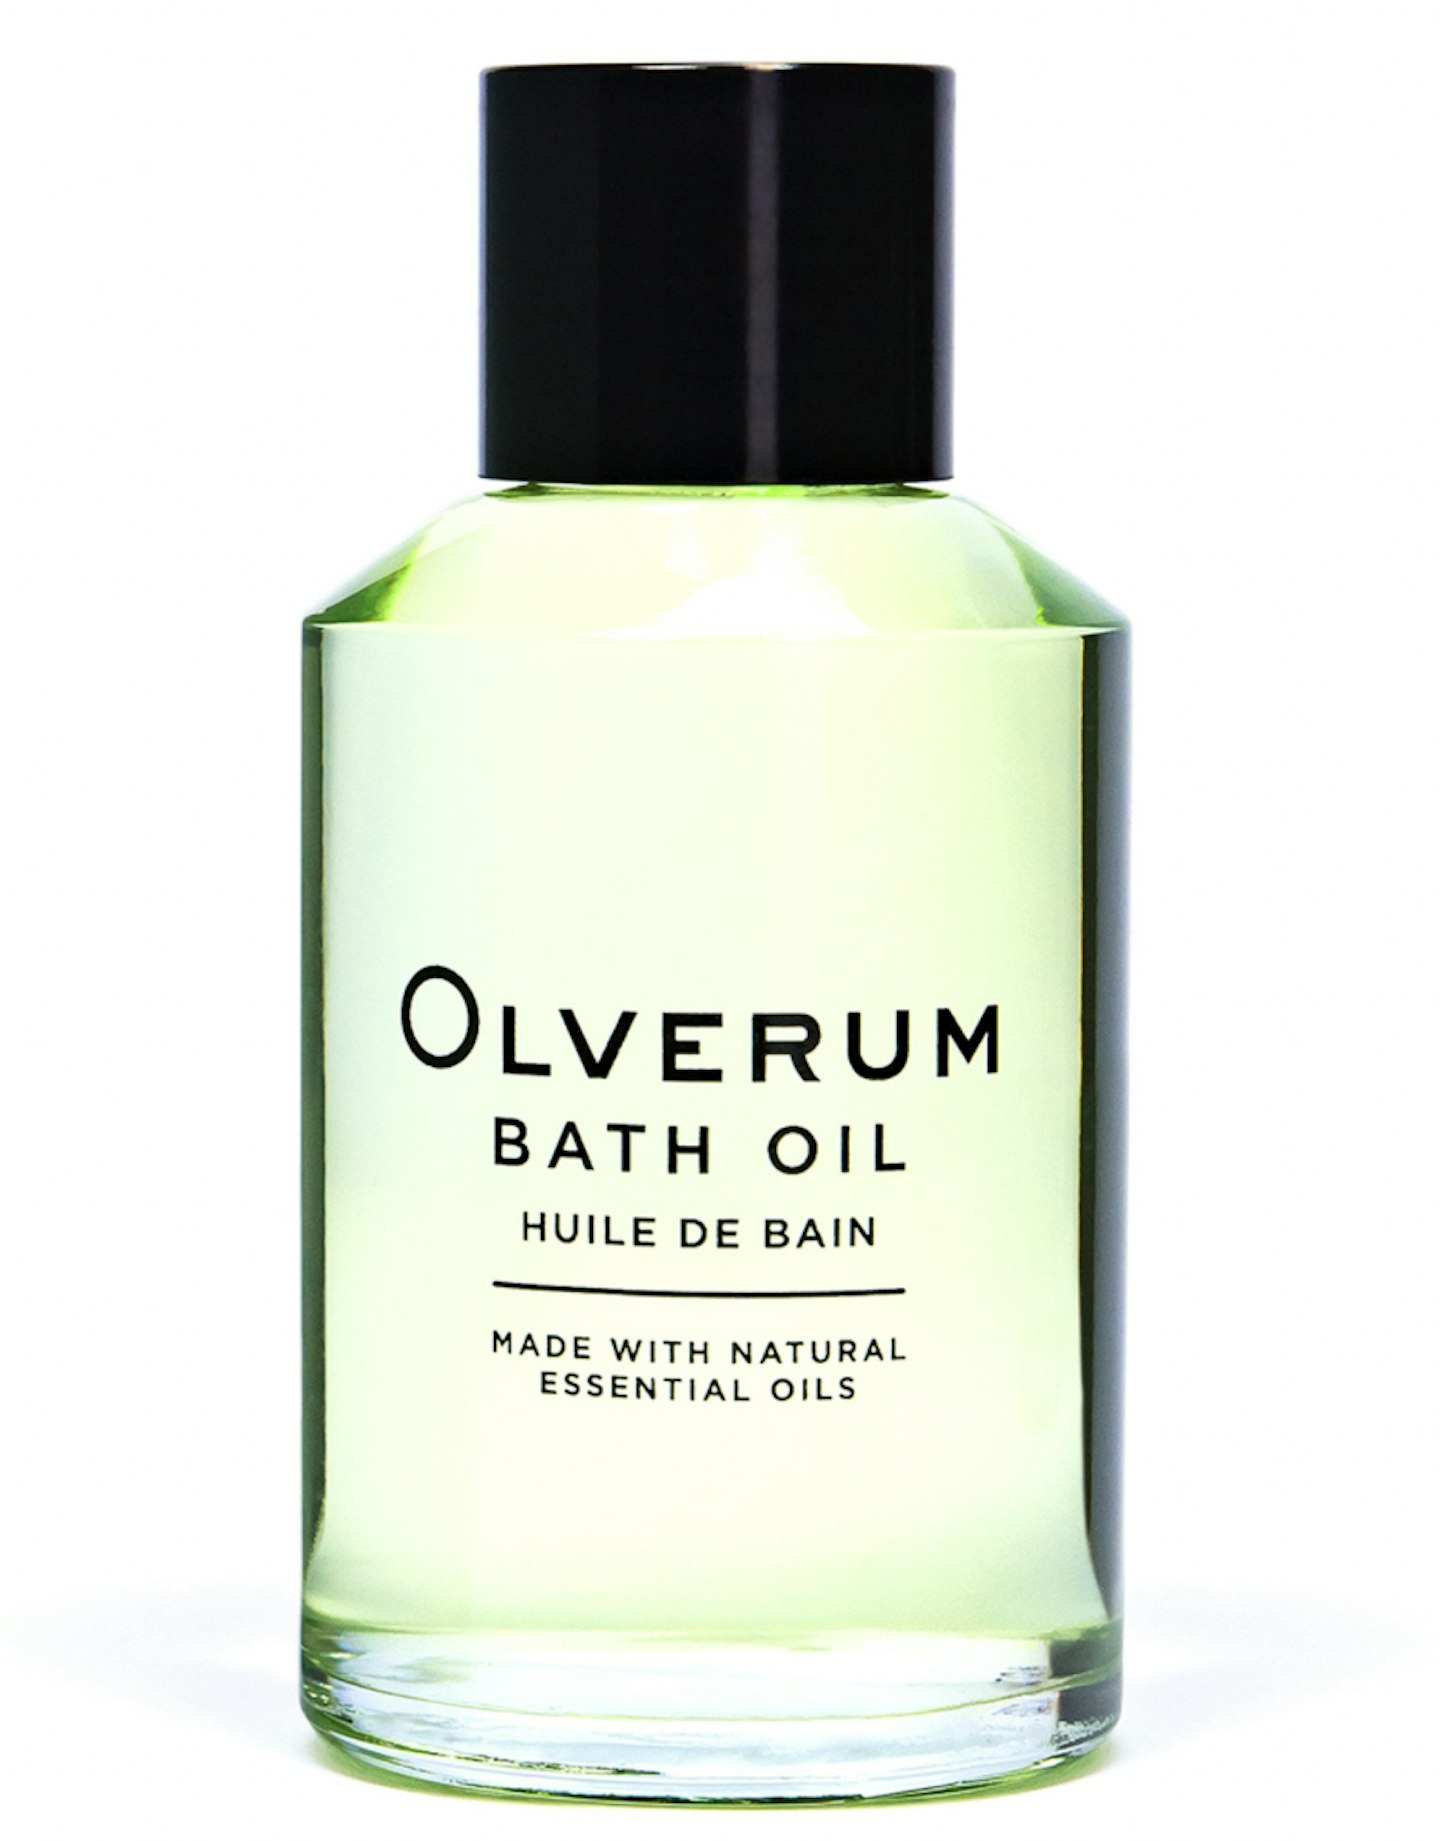 Olverum Bath Oi